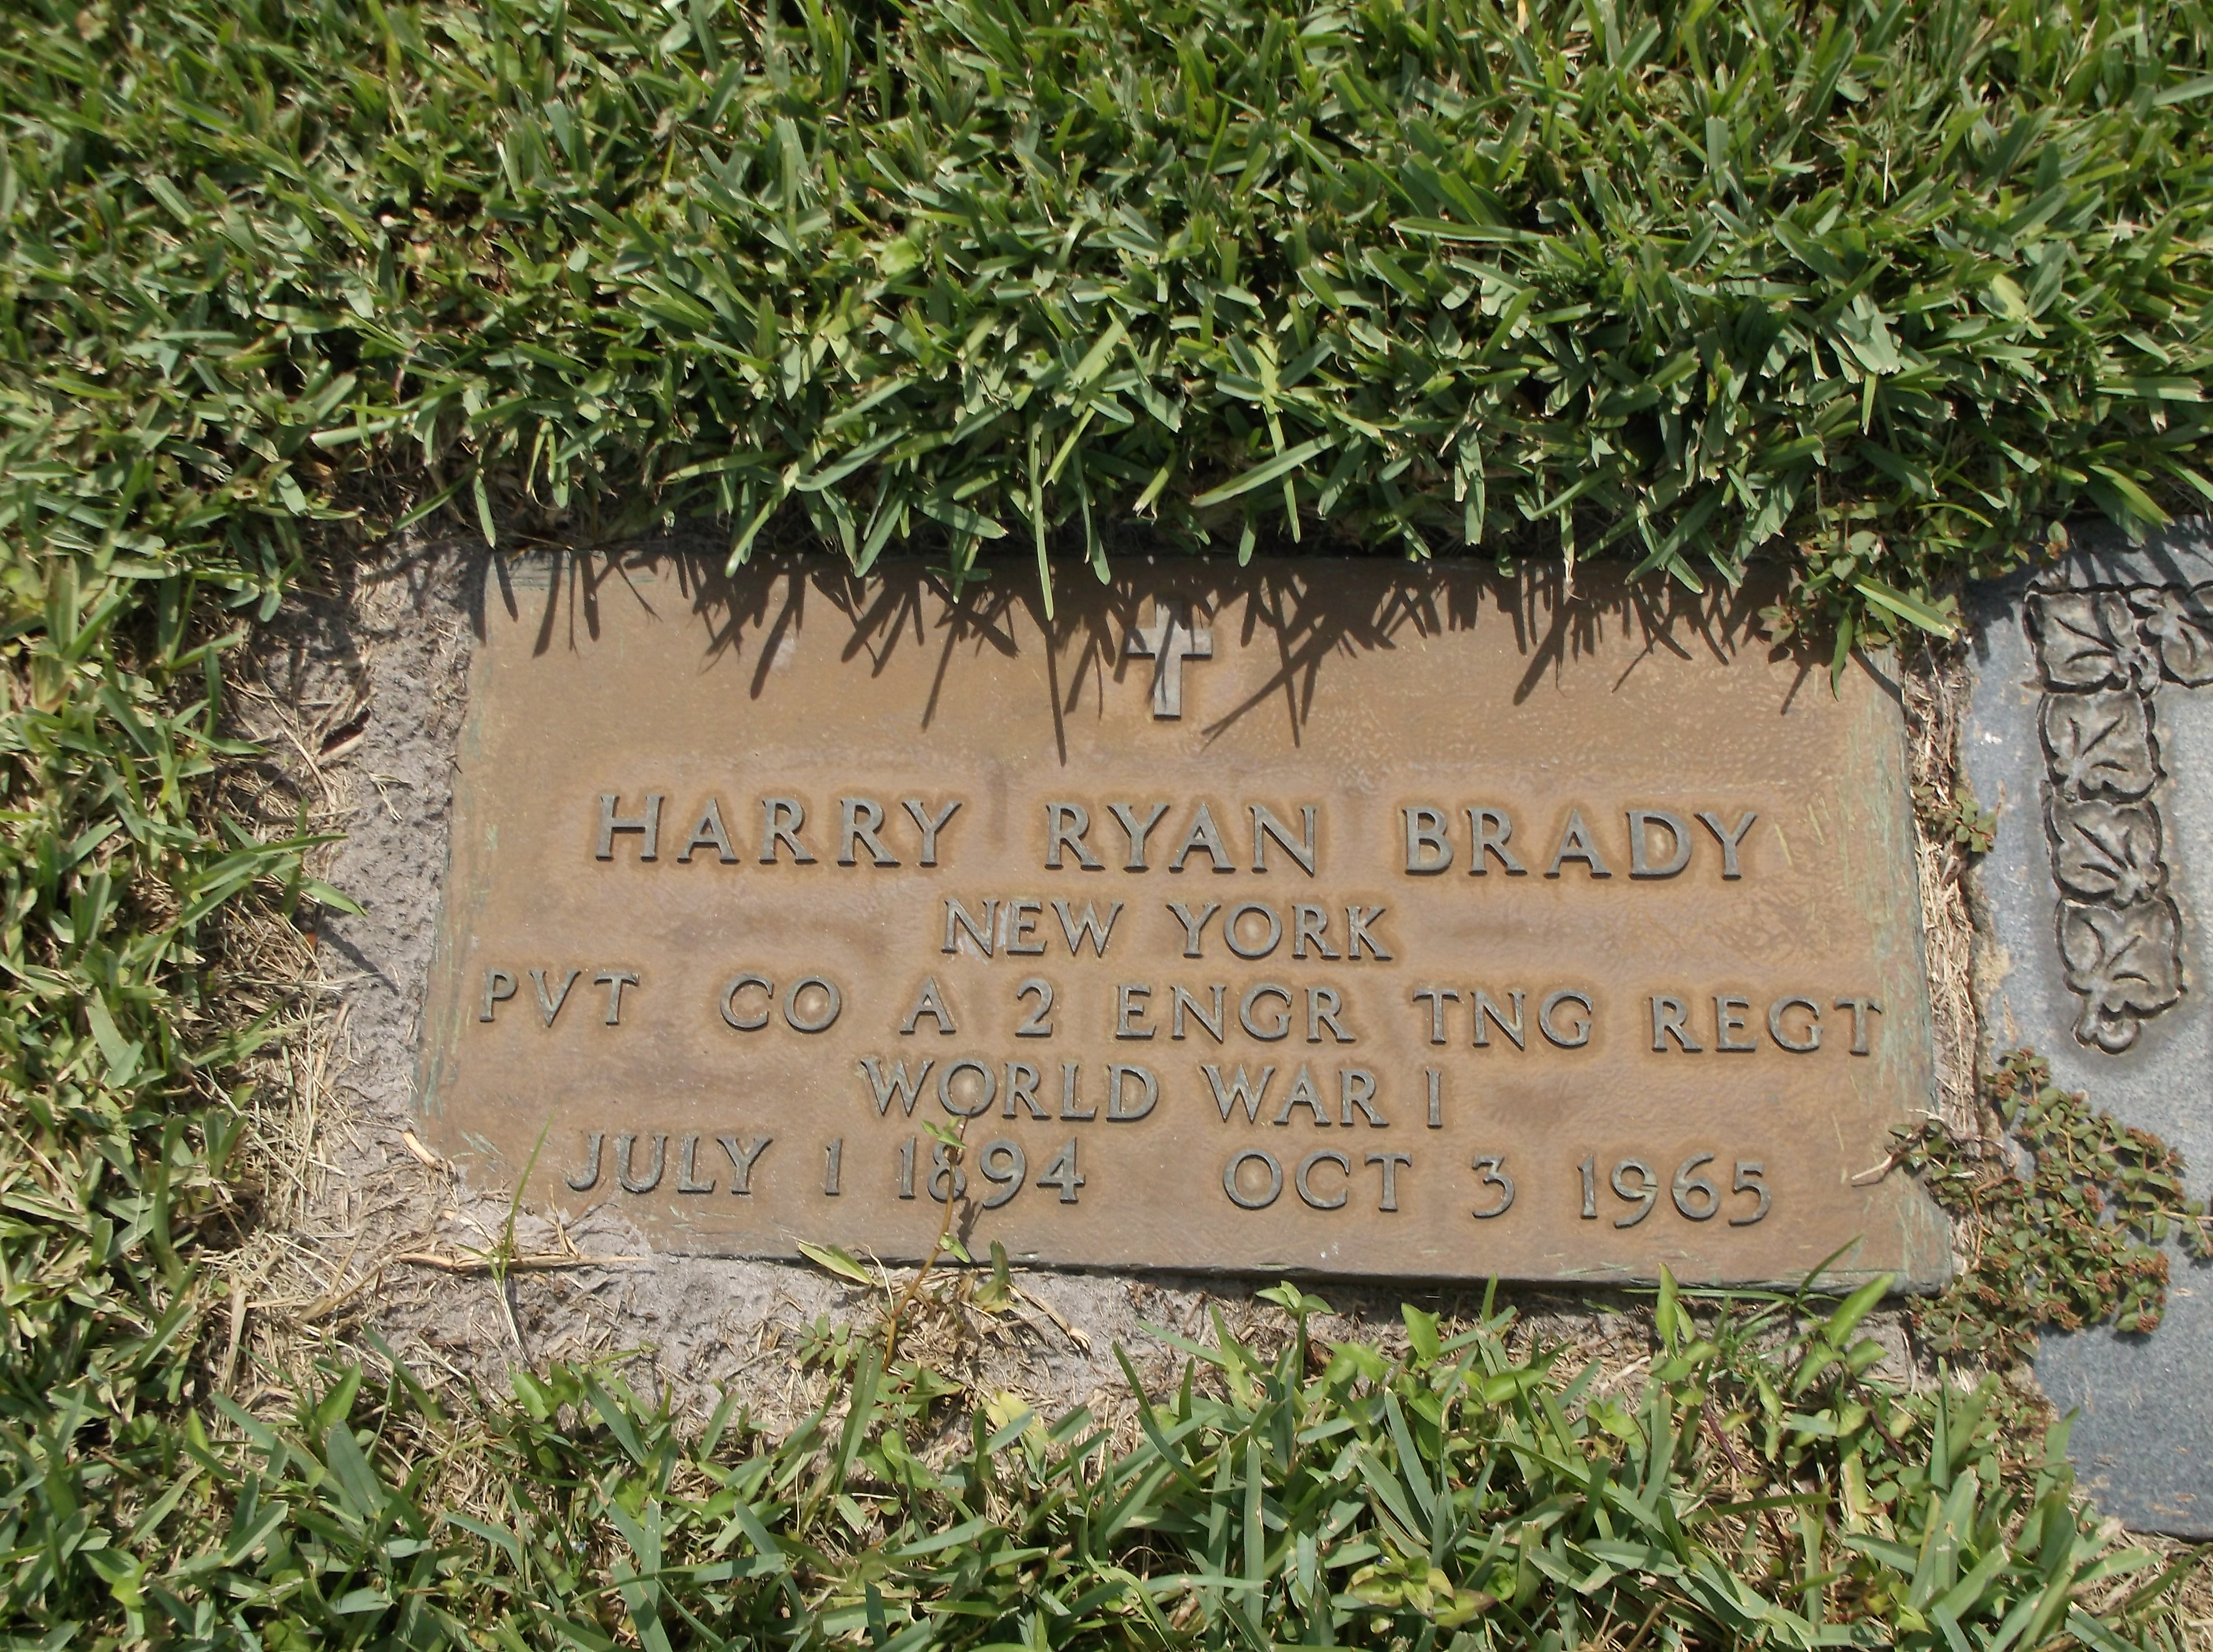 Harry Ryan Brady